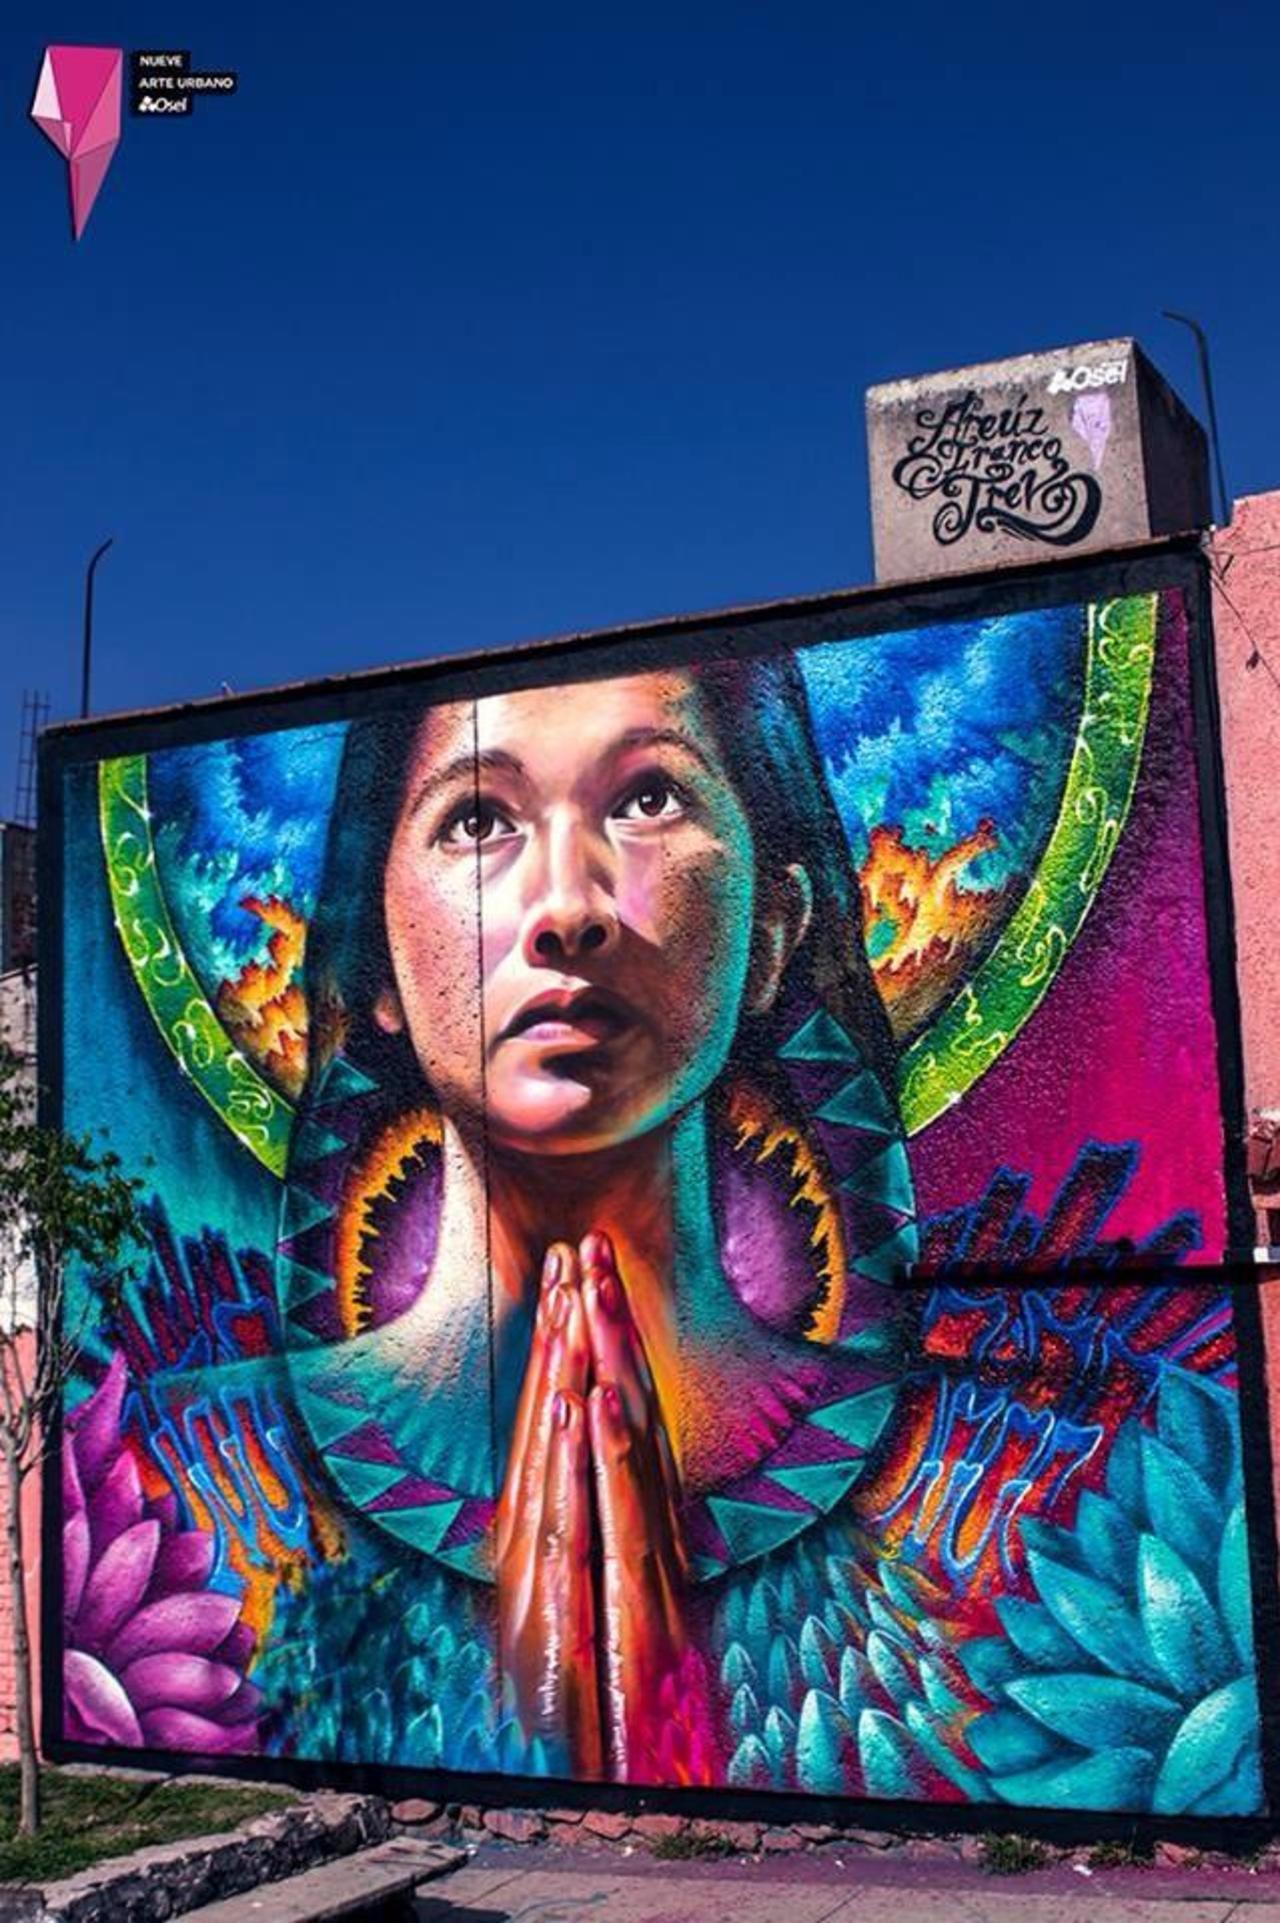 Artist Areúz 77 new Street Art mural in Queretaro, Mexico #Art #graffiti #mural #streetart http://t.co/PnTgxtItAi